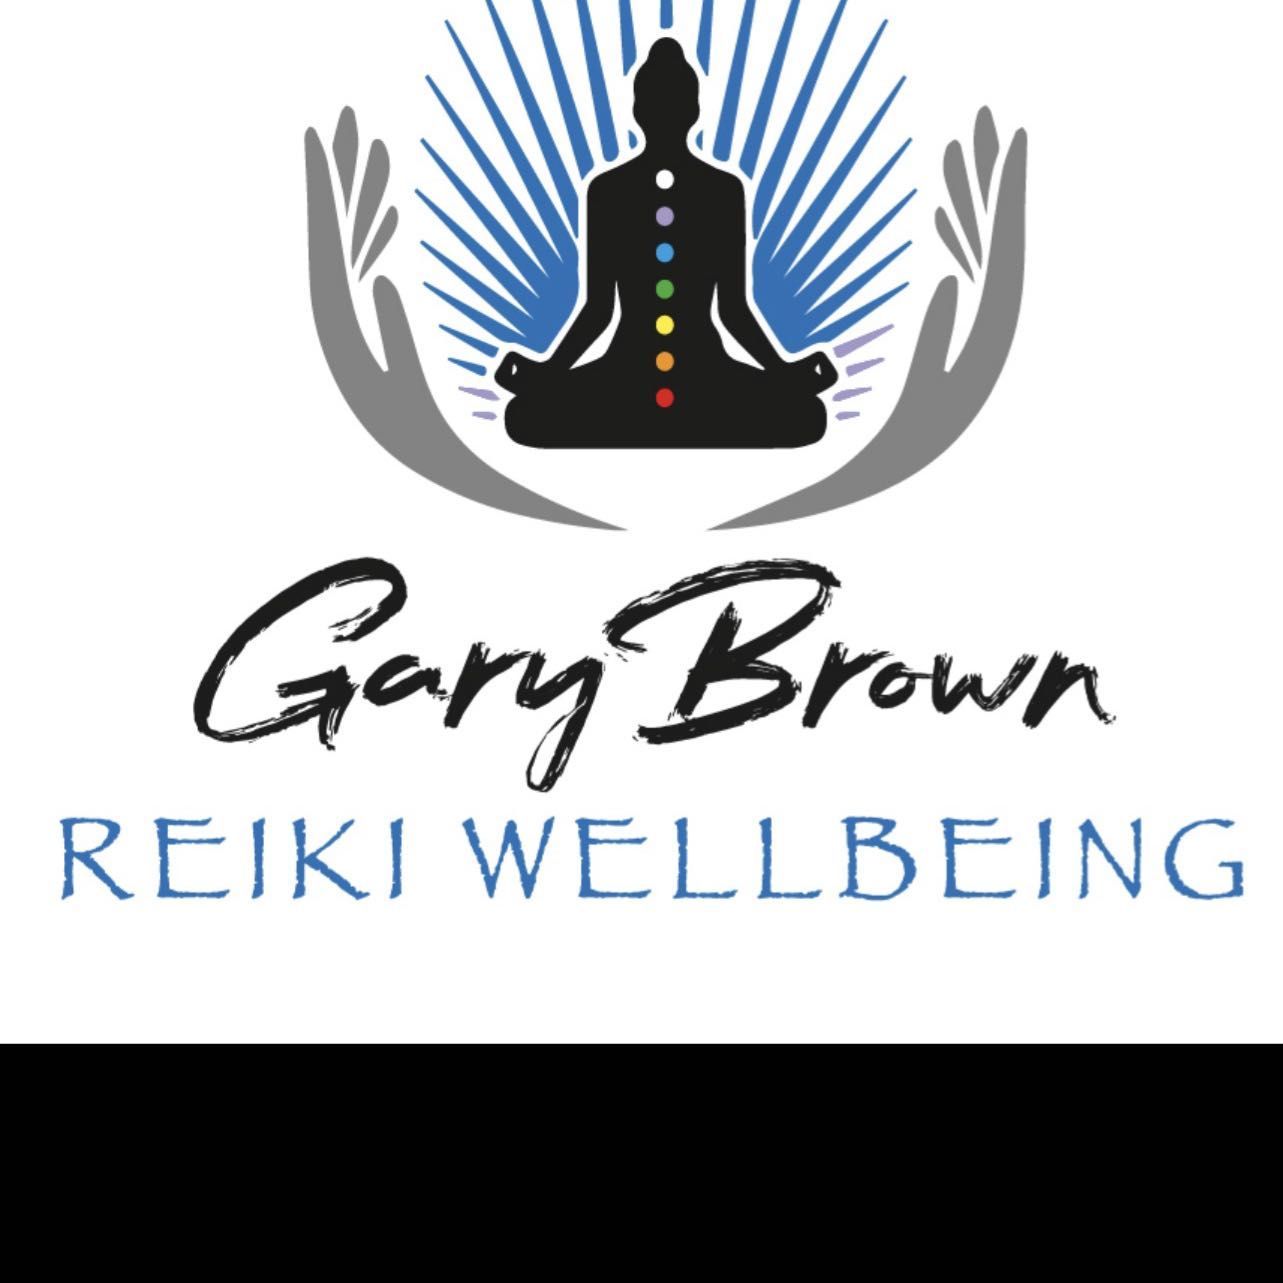 Reiki Wellbeing By Gary Brown, Windermere Road, 113, SK1 4NN, Stockport